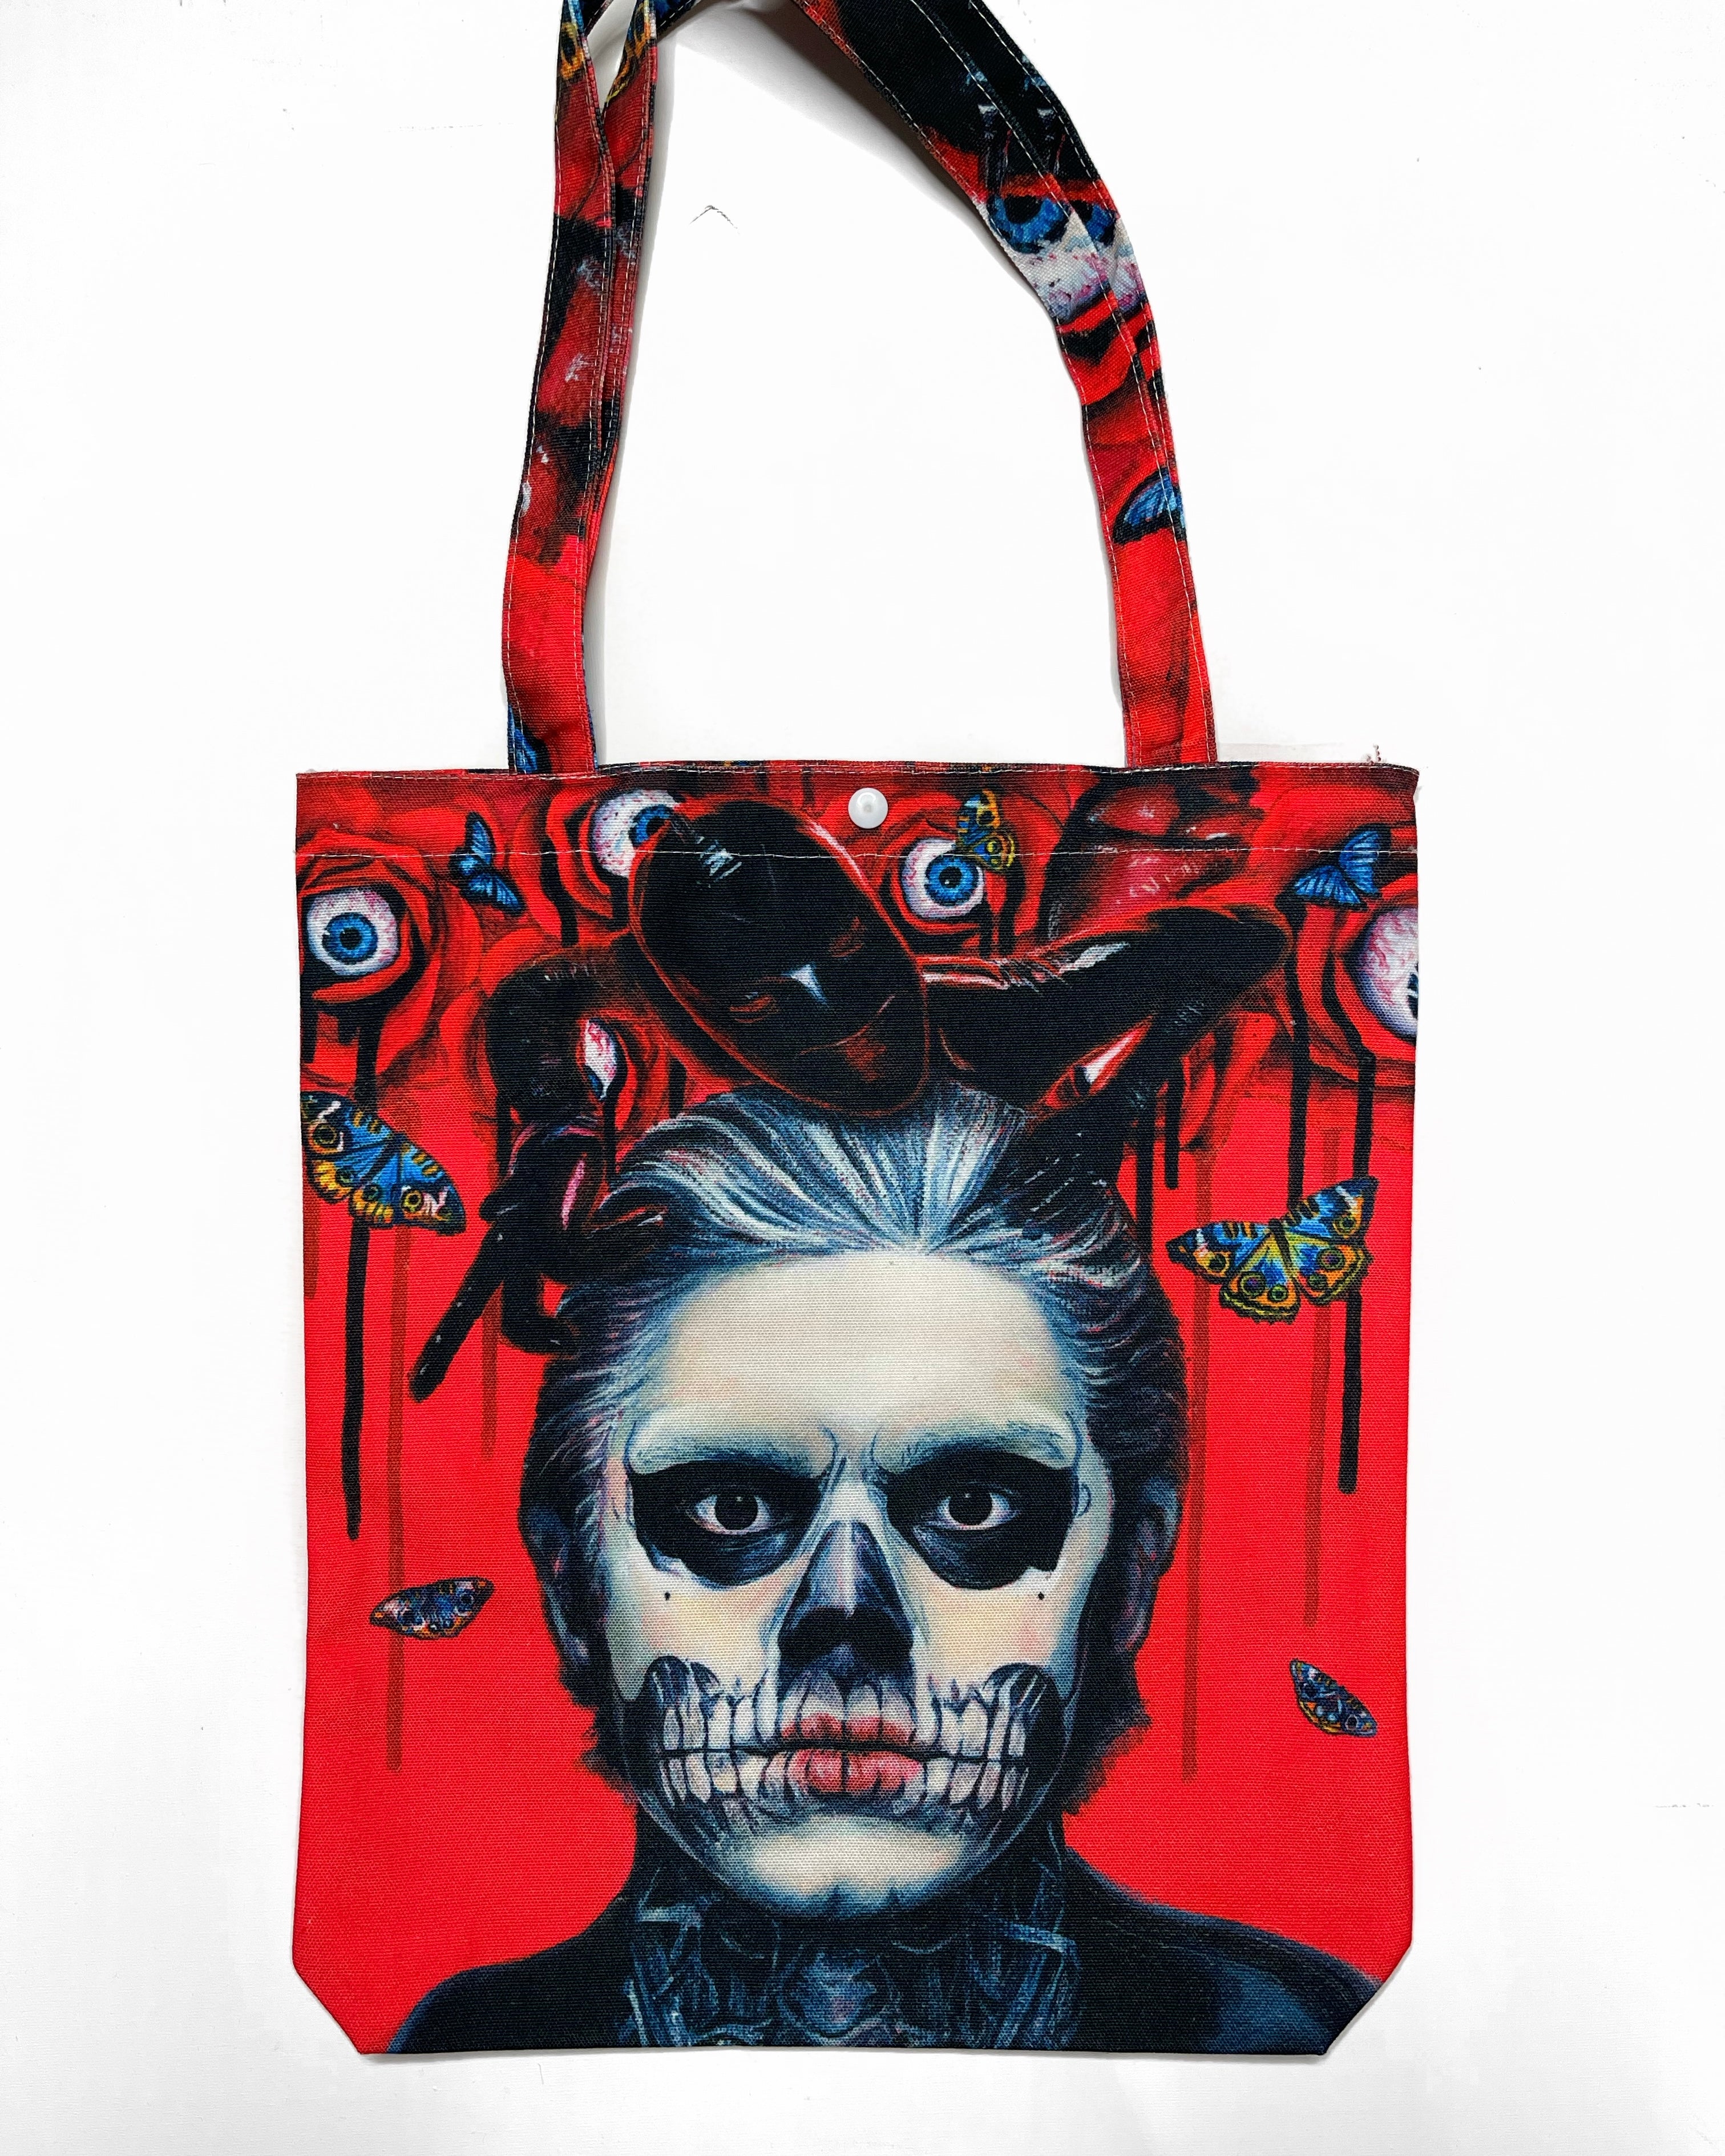 Tate (American Horror Story) Tote Bag